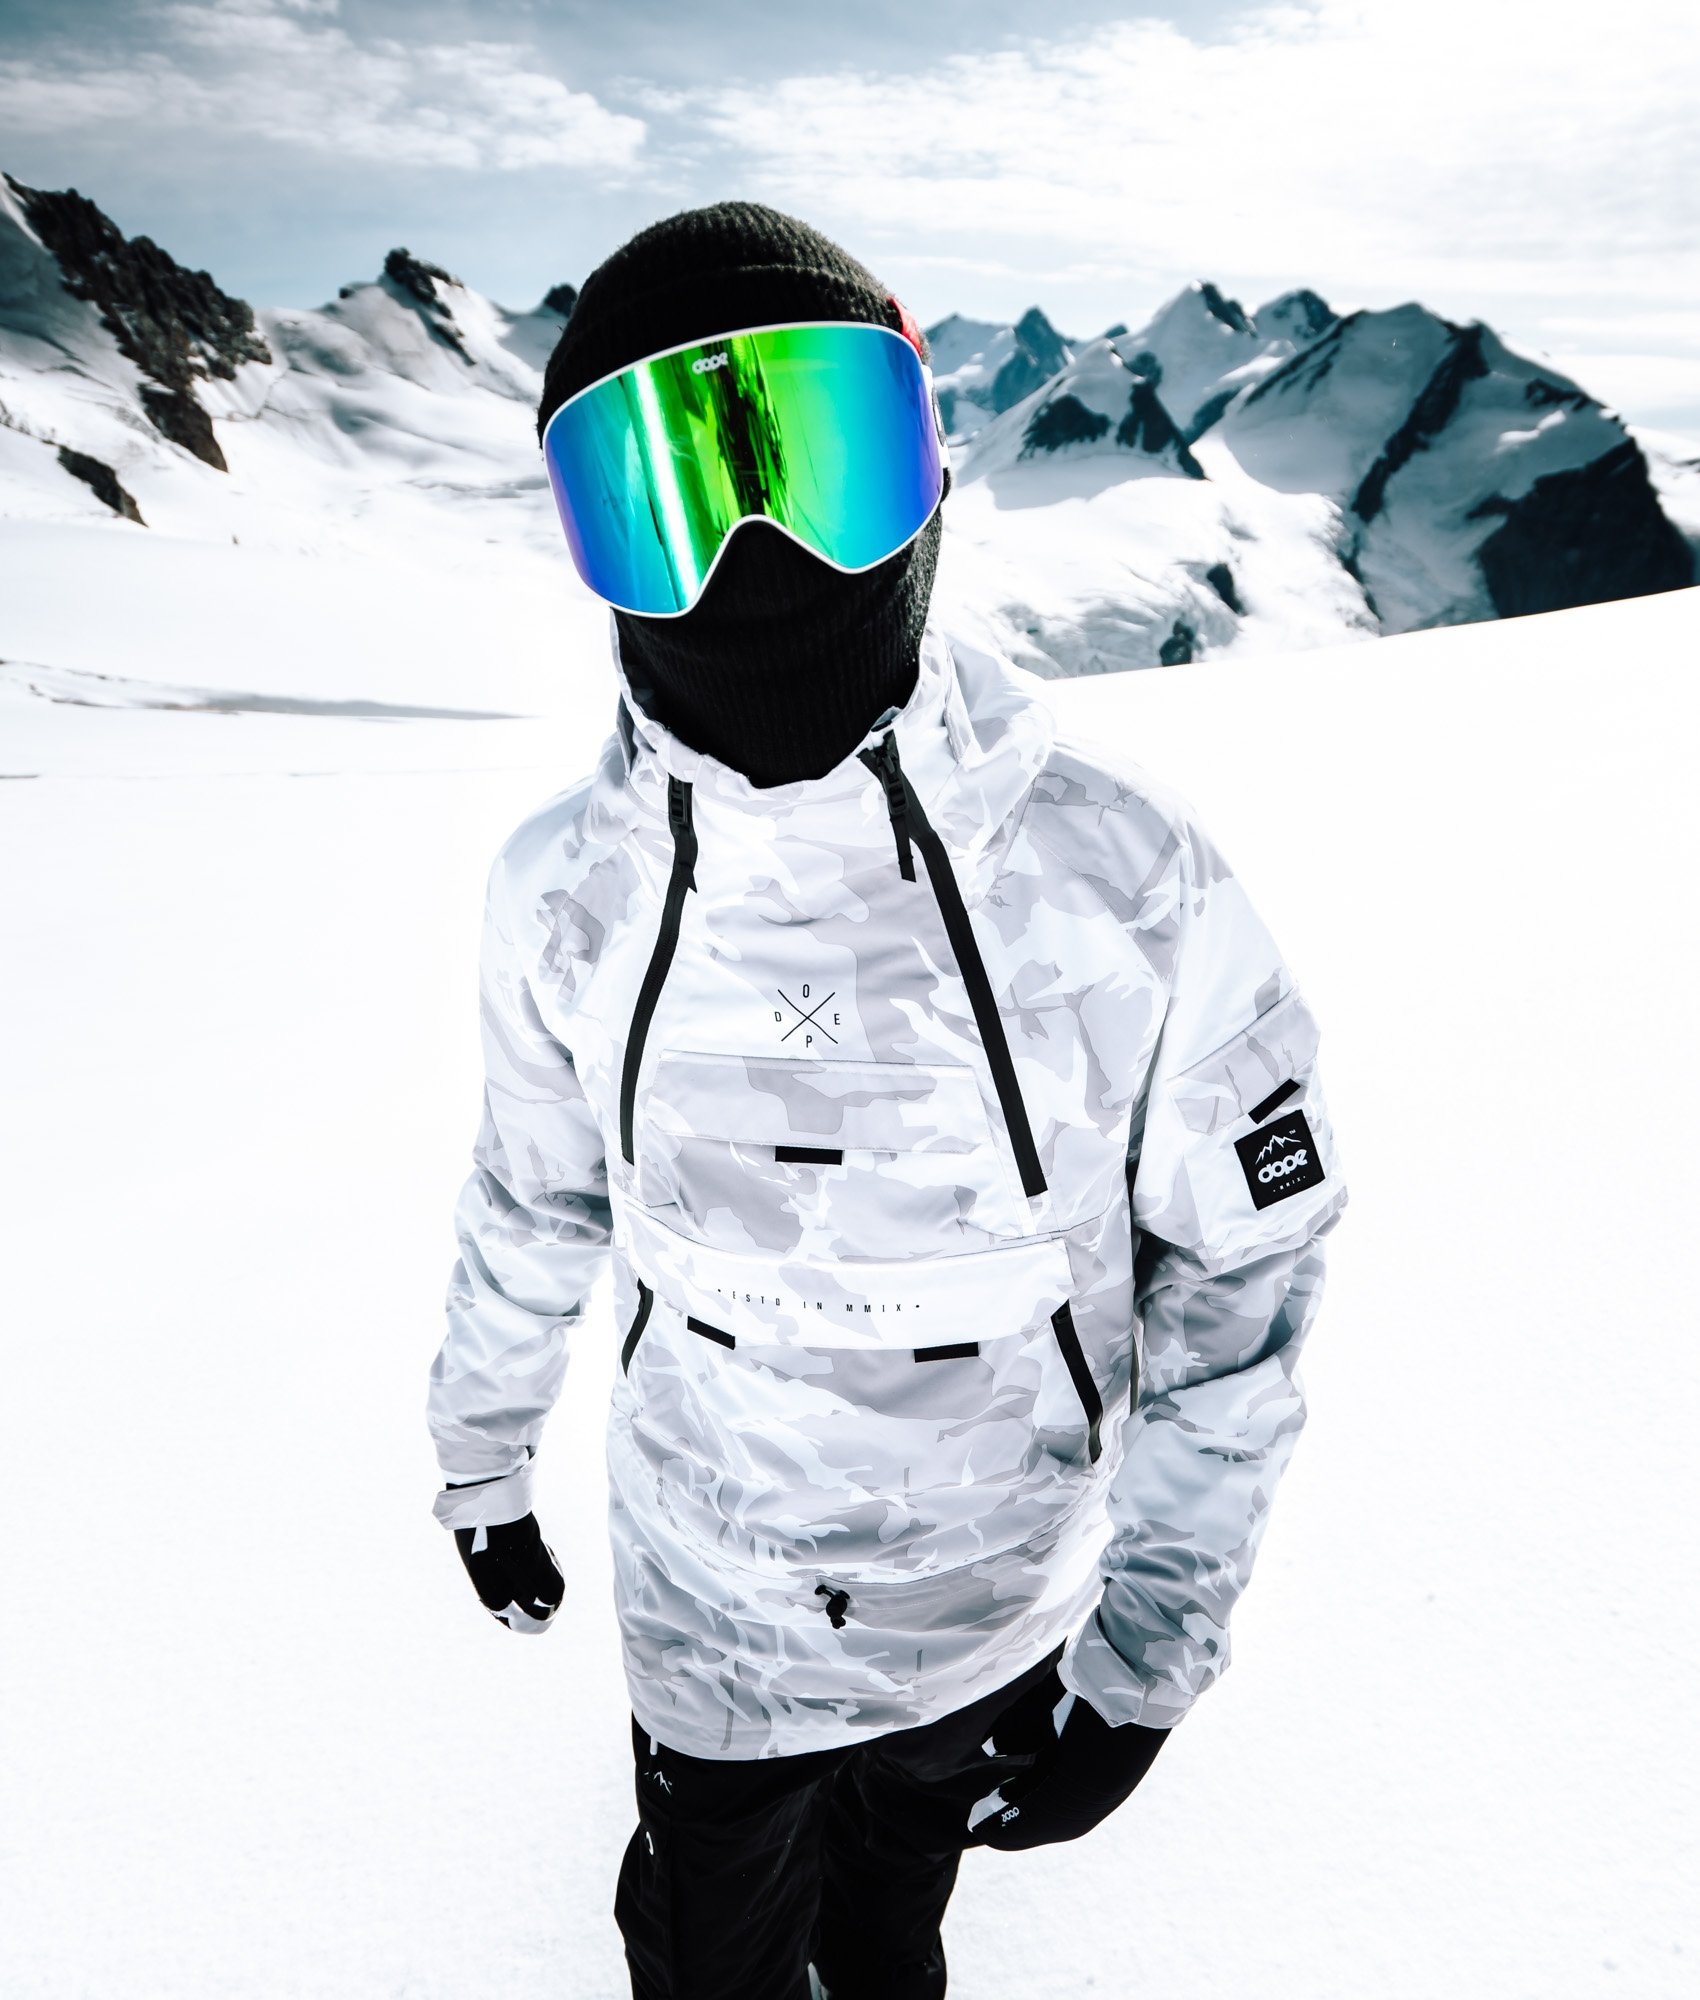 Сноуборд одежда черная. Анорак Dope сноубордический. Dope куртки для сноуборда. Dope Akin. Dope Akin Snowboard Jacket.